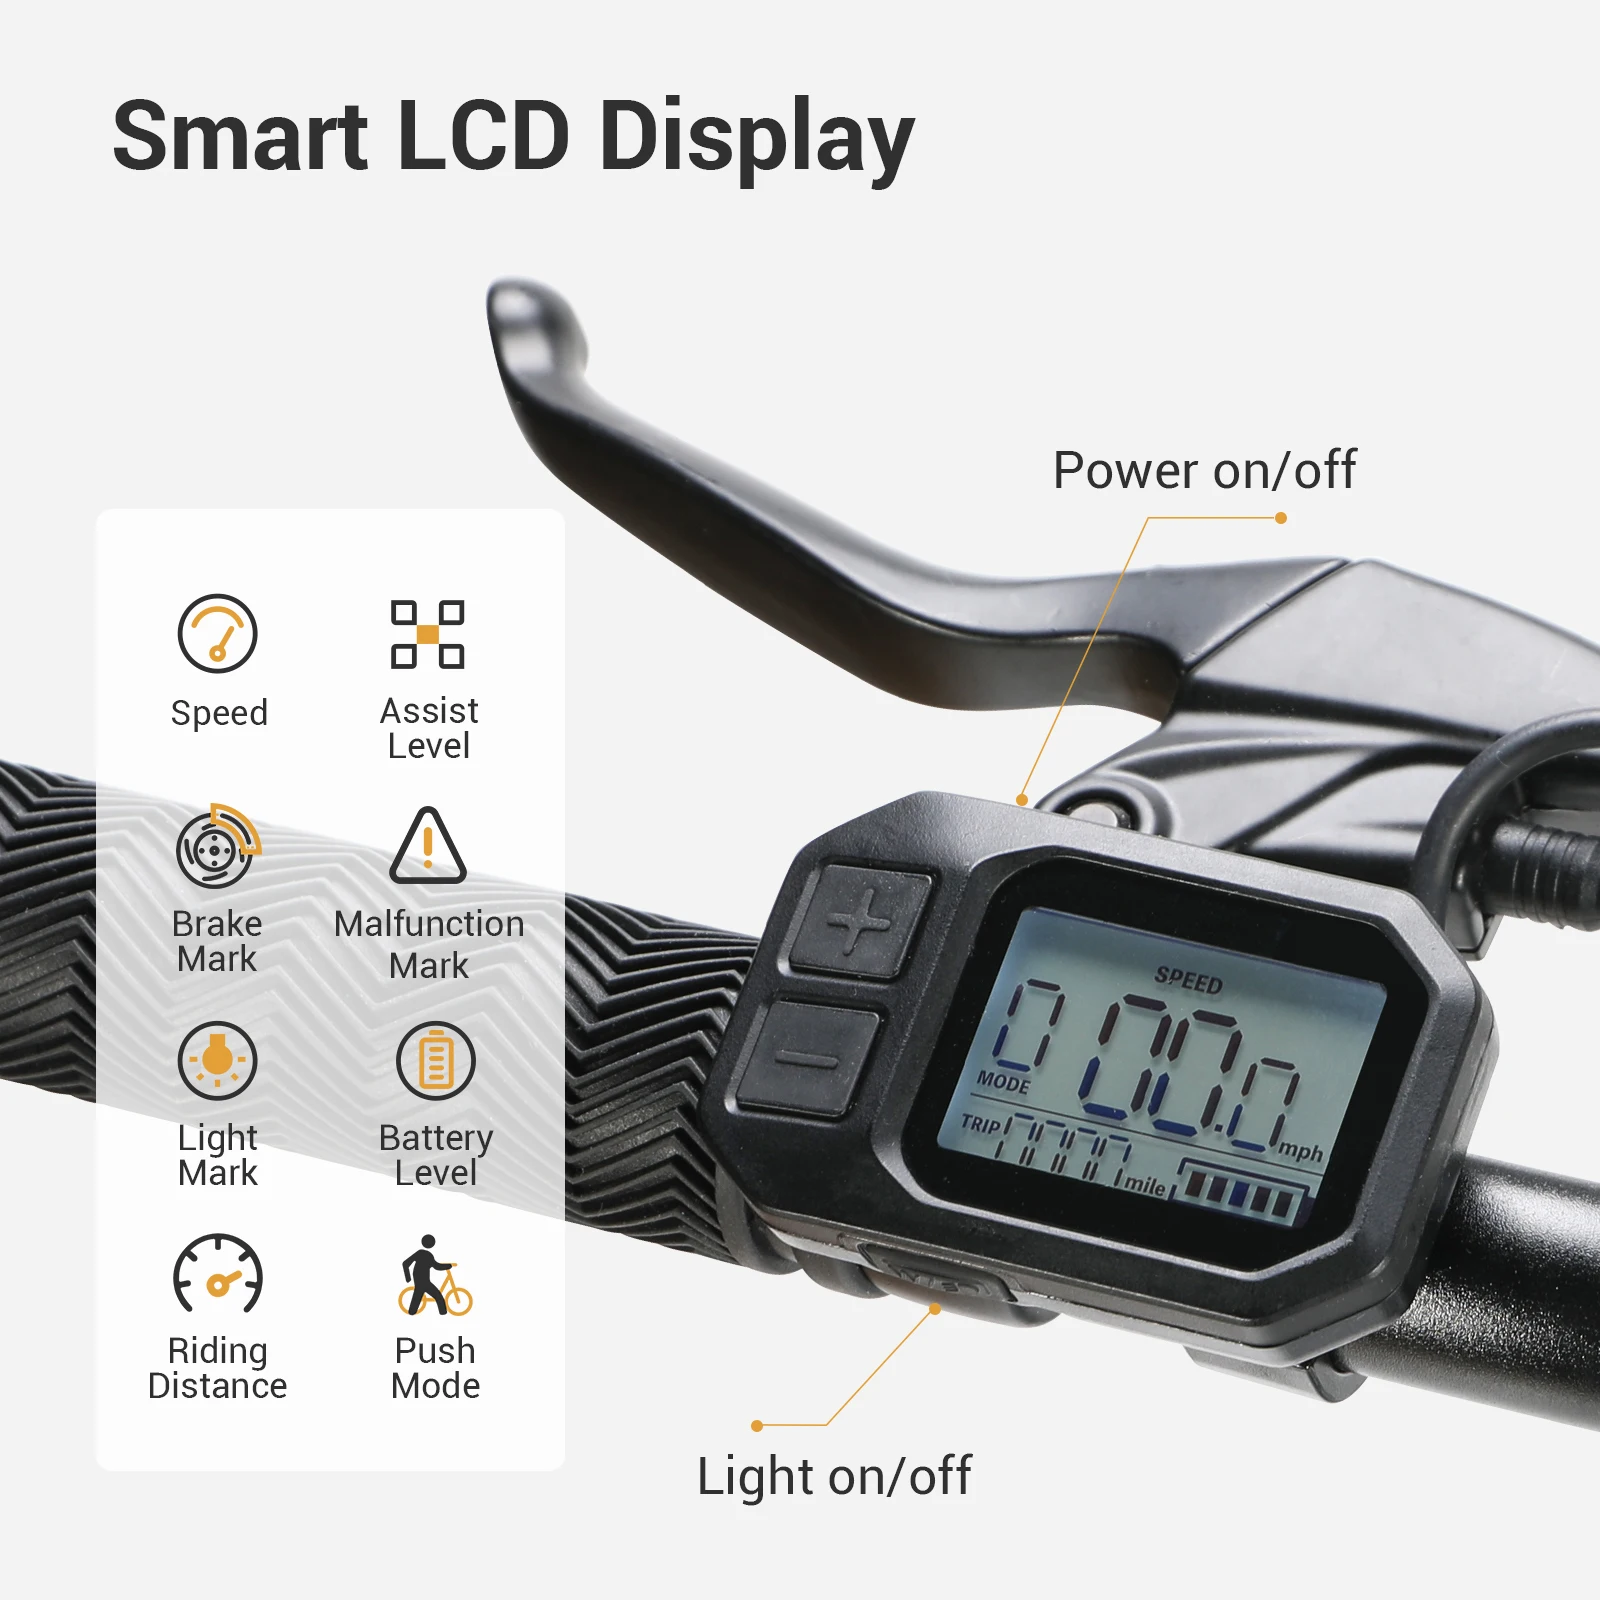 Smart Lcd Display